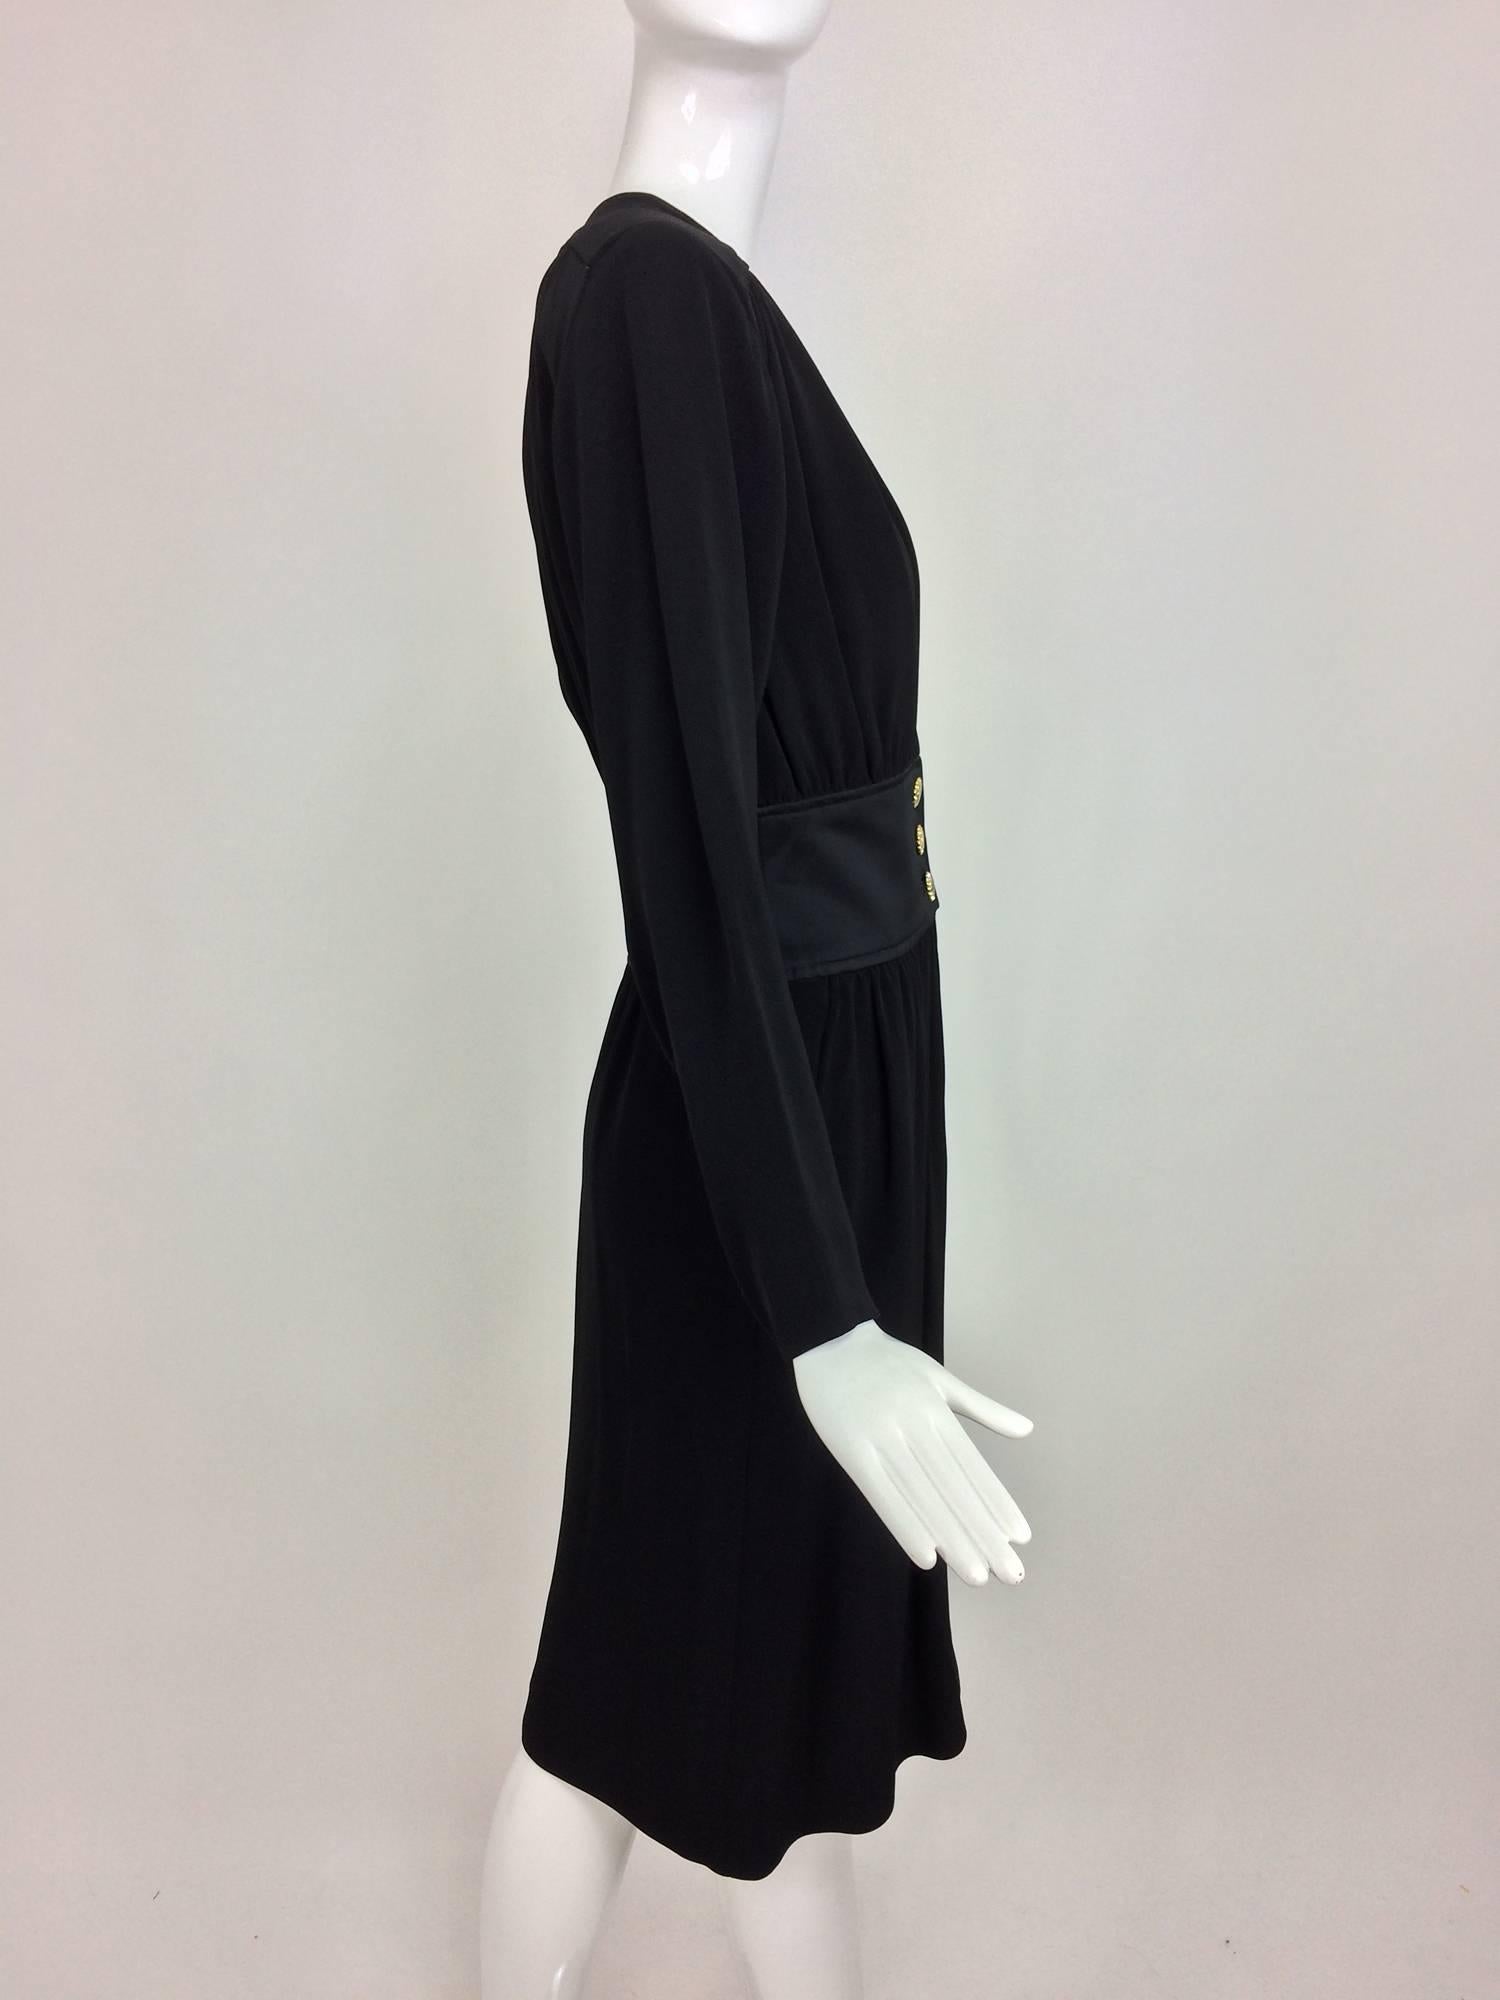 Vintage Yves St Laurent chic black crepe and satin cocktail dress 1990s unworn 2